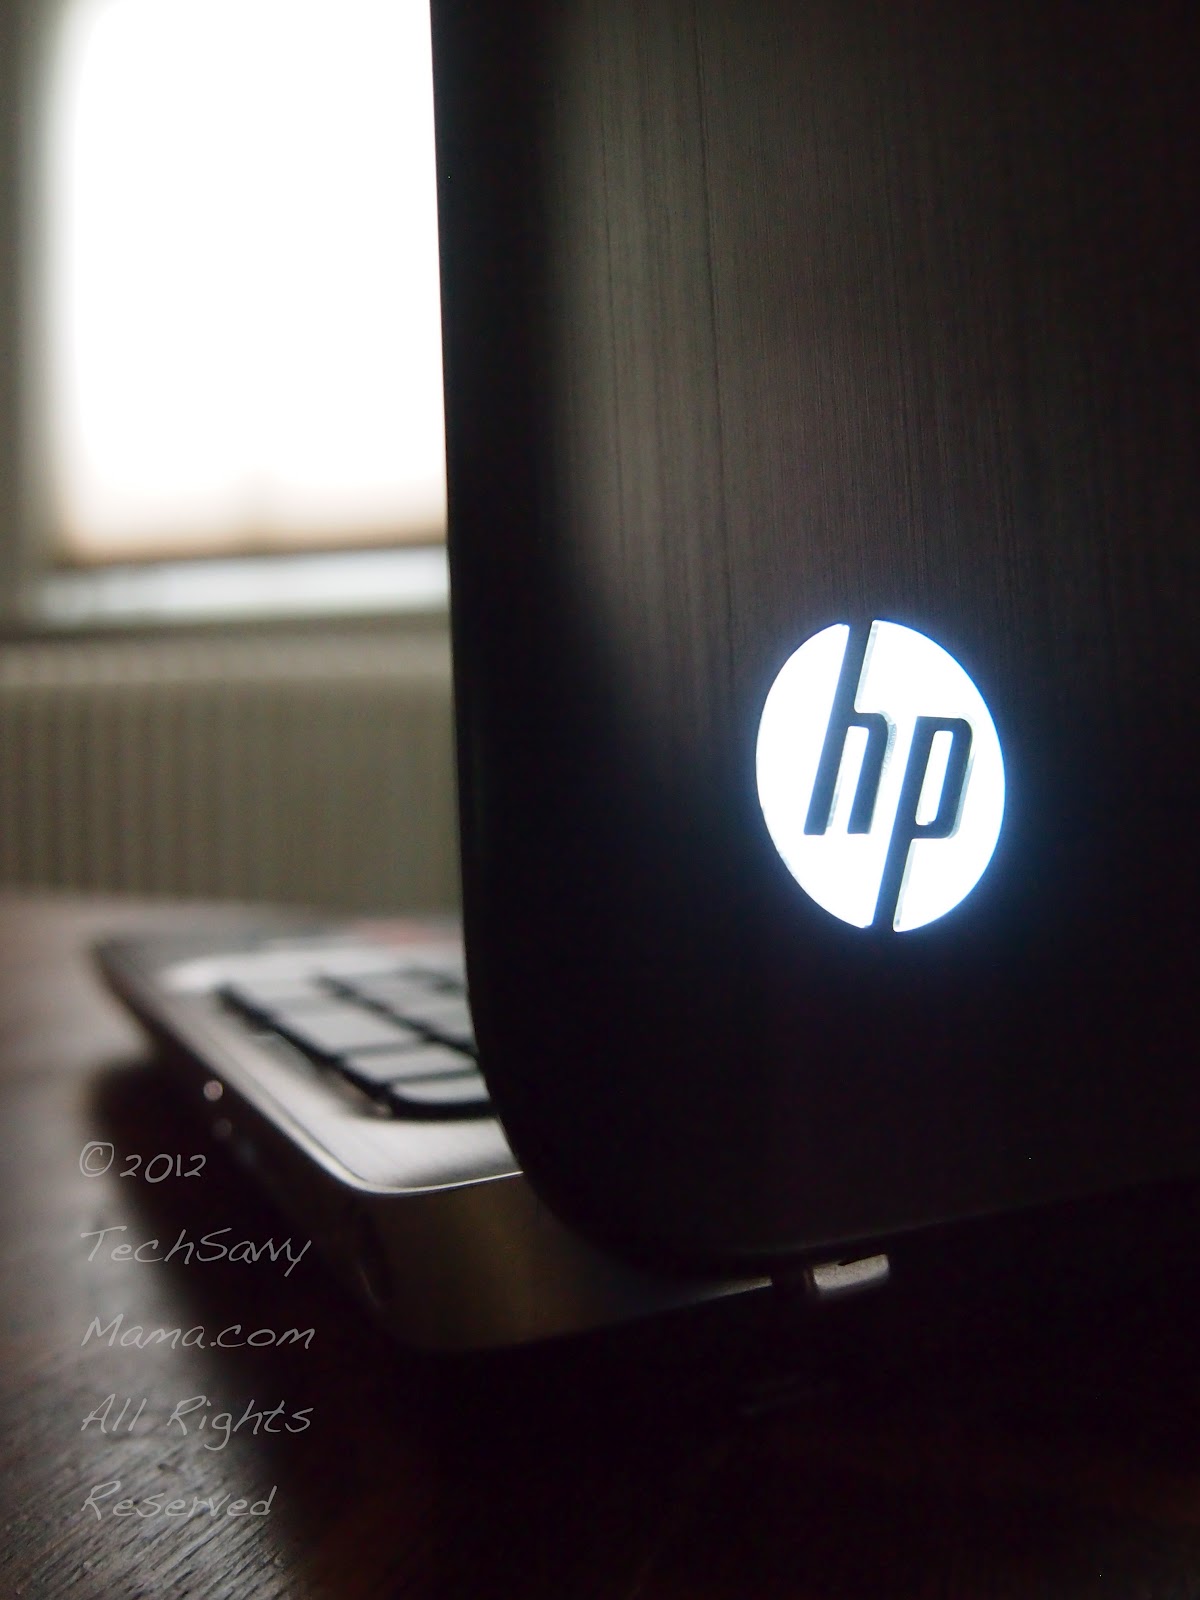 HP Pavilion Notebook PC dv6